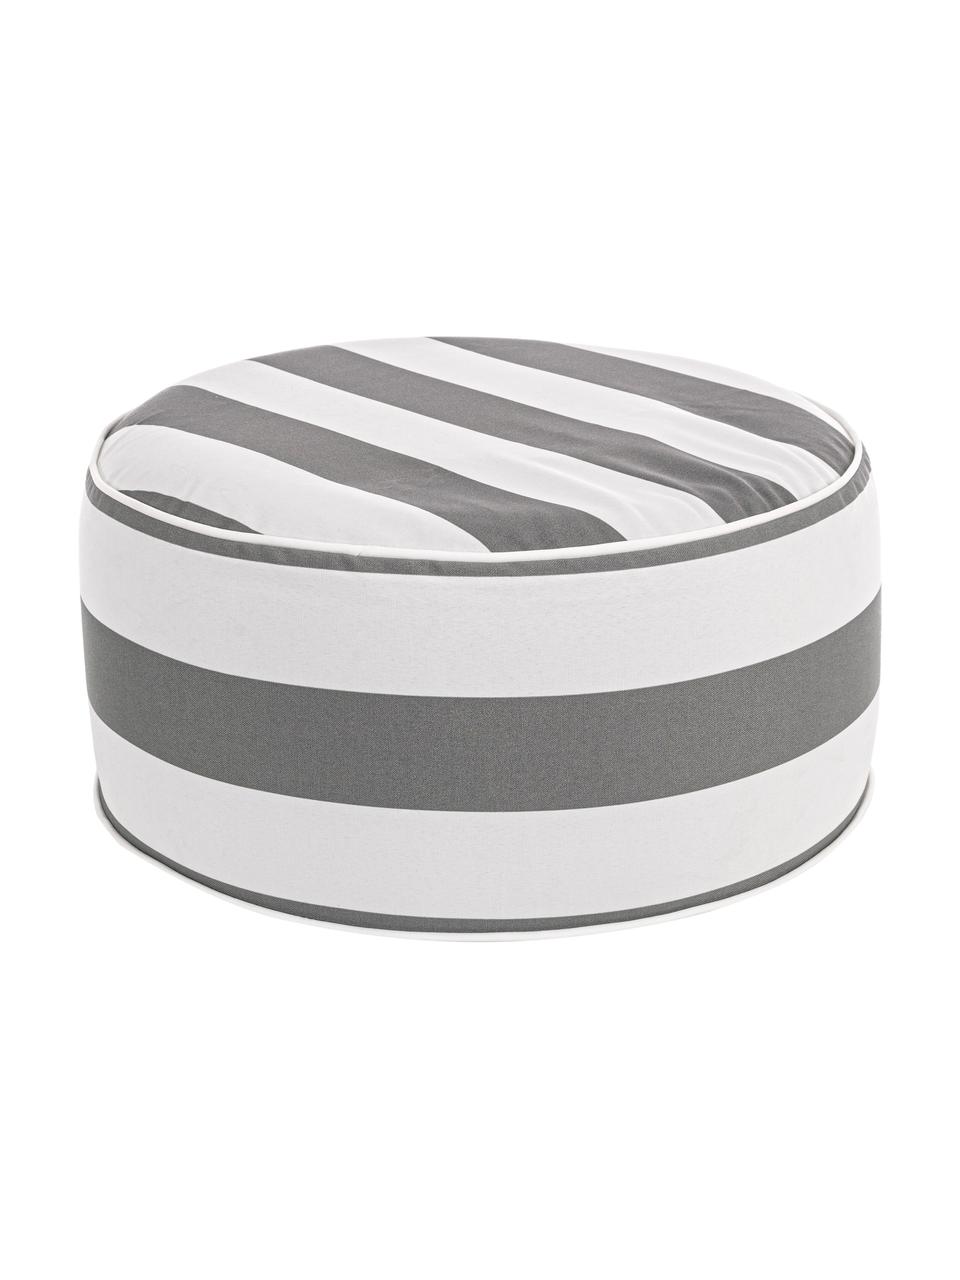 Aufblasbarer Outdoor-Pouf Stripes in Weiß/Grau, Bezug: 100% Polyestergewebe (200, Weiß, Grau, gestreift, Ø 53 x H 23 cm